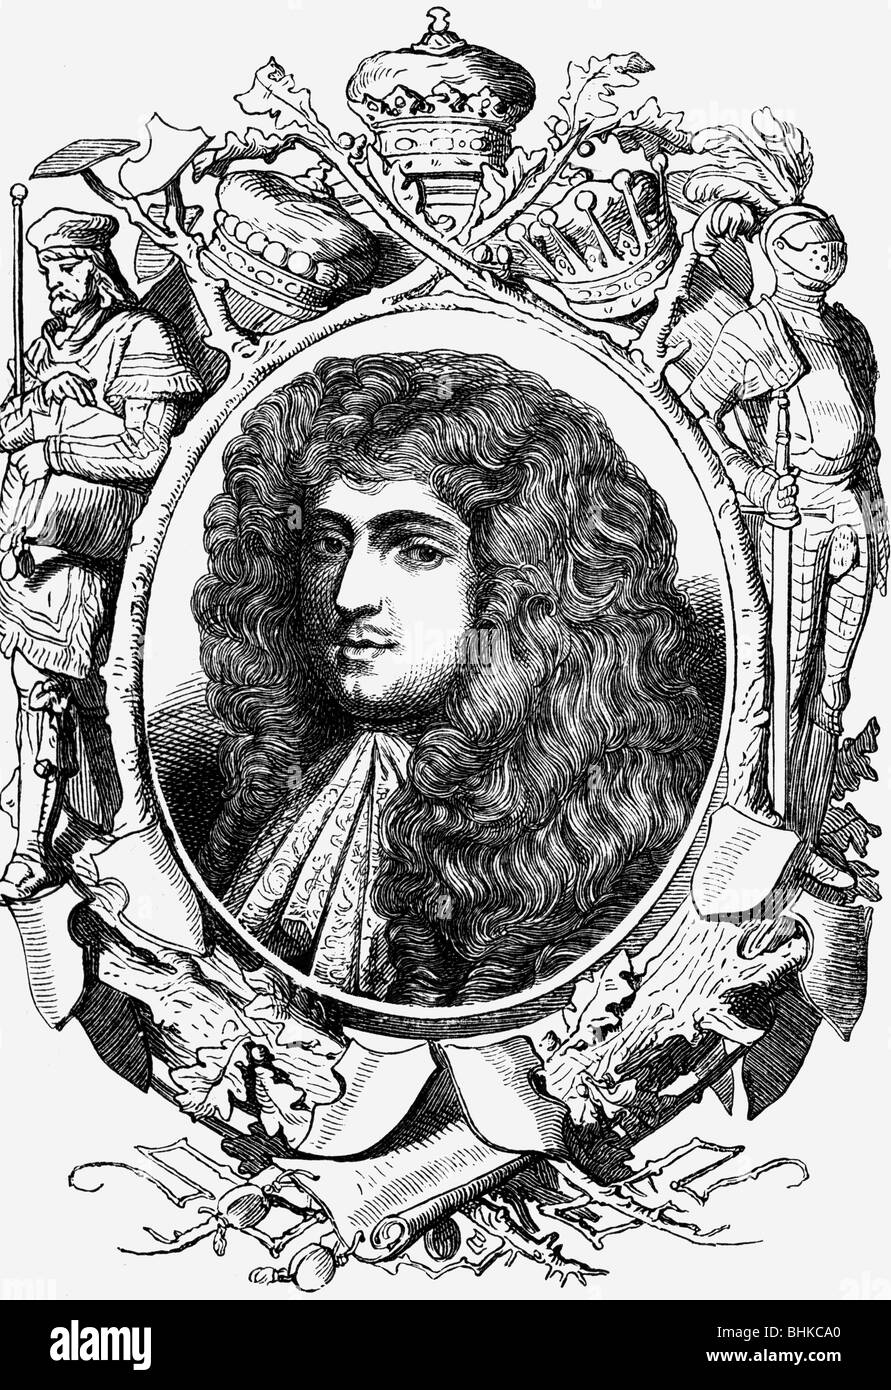 Somerset, Henry, 1st Duke of Beaufort, 1629 - 21.1.1700, English politician, portrait, wood engraving, 19th century, , Stock Photo